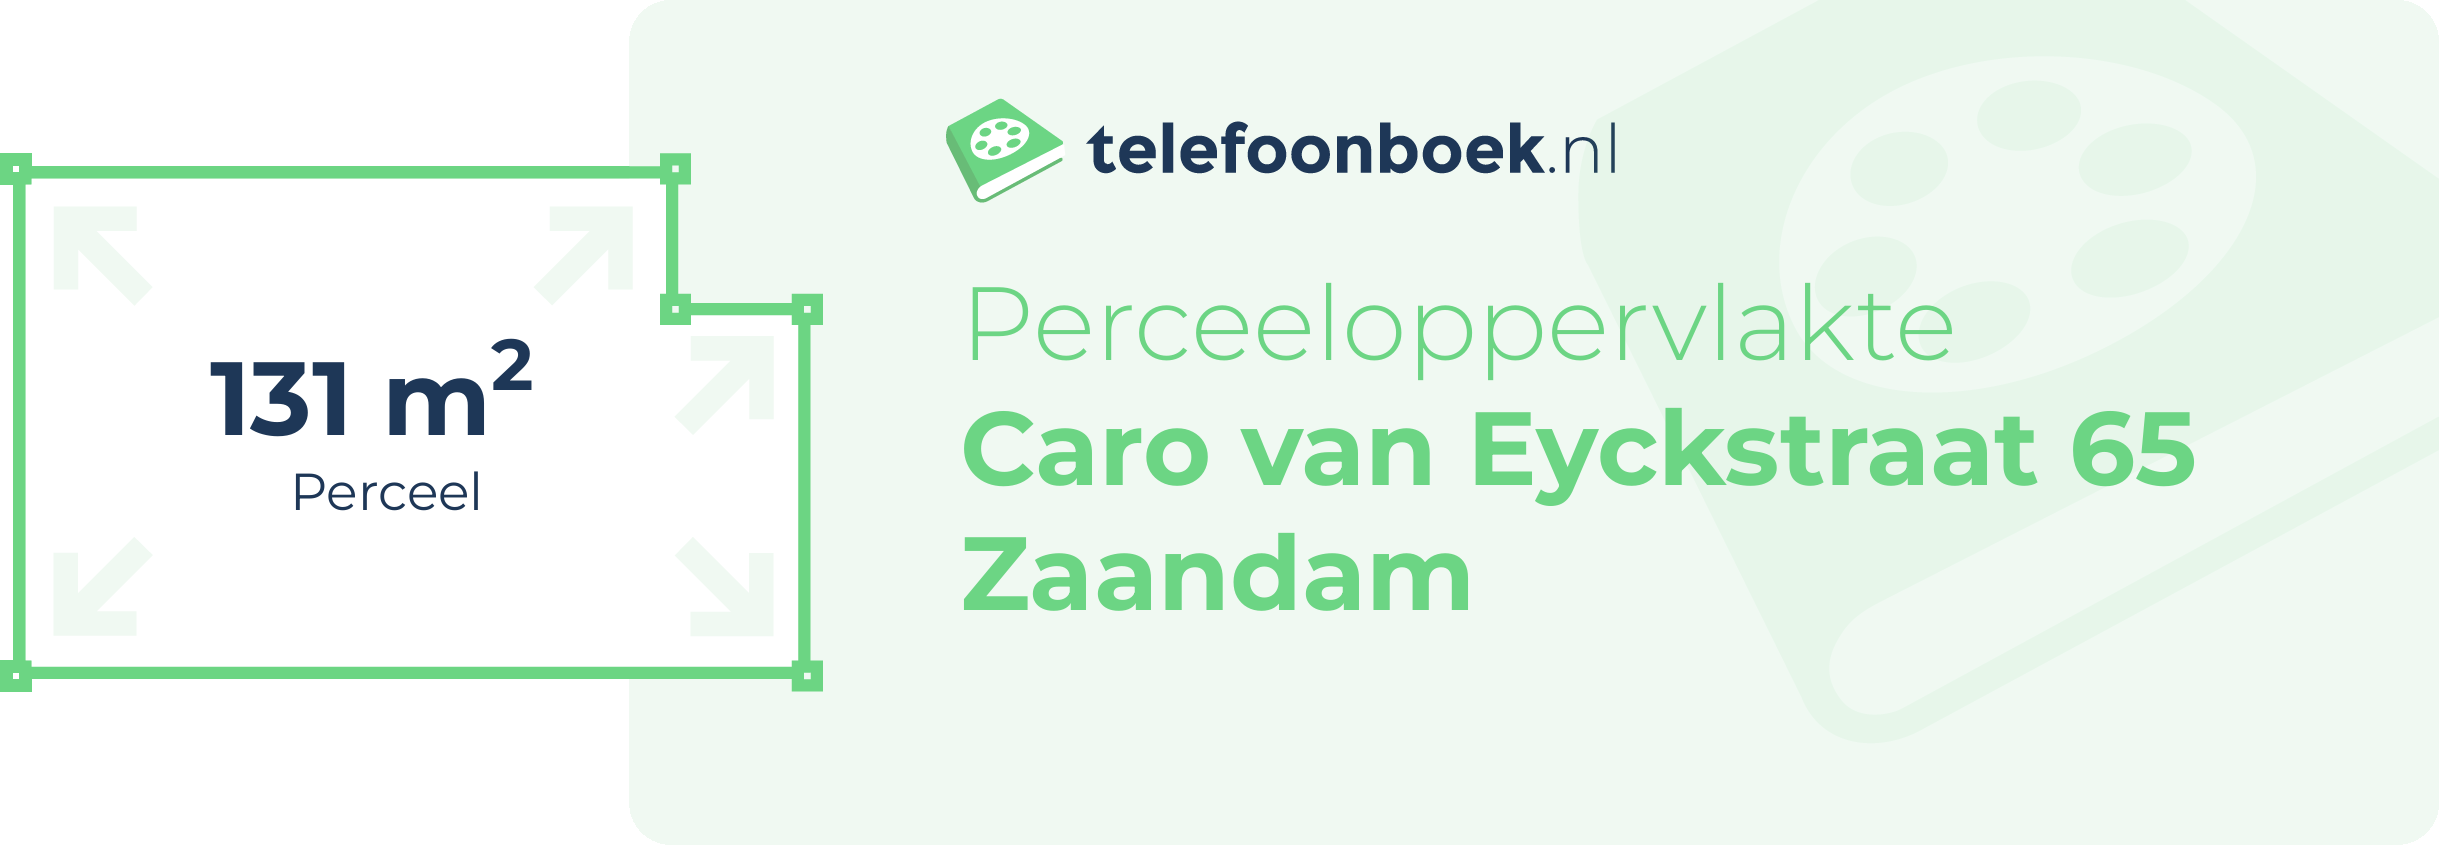 Perceeloppervlakte Caro Van Eyckstraat 65 Zaandam